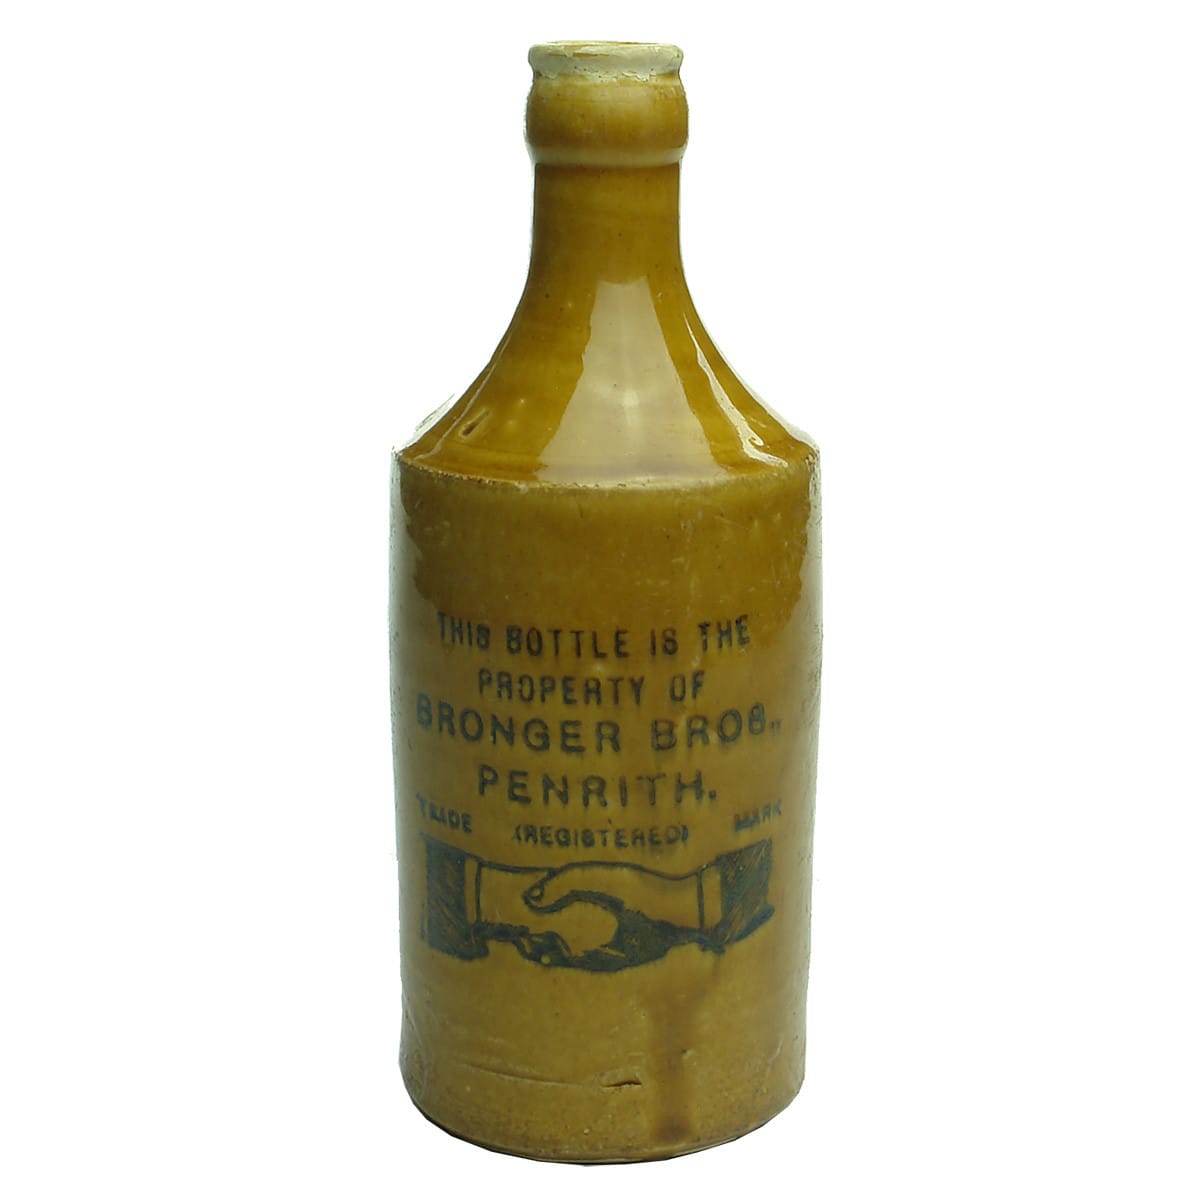 Ginger Beer. Bronger Bros., Penrith. Crown Seal. Dump. All Tan. (New South Wales)